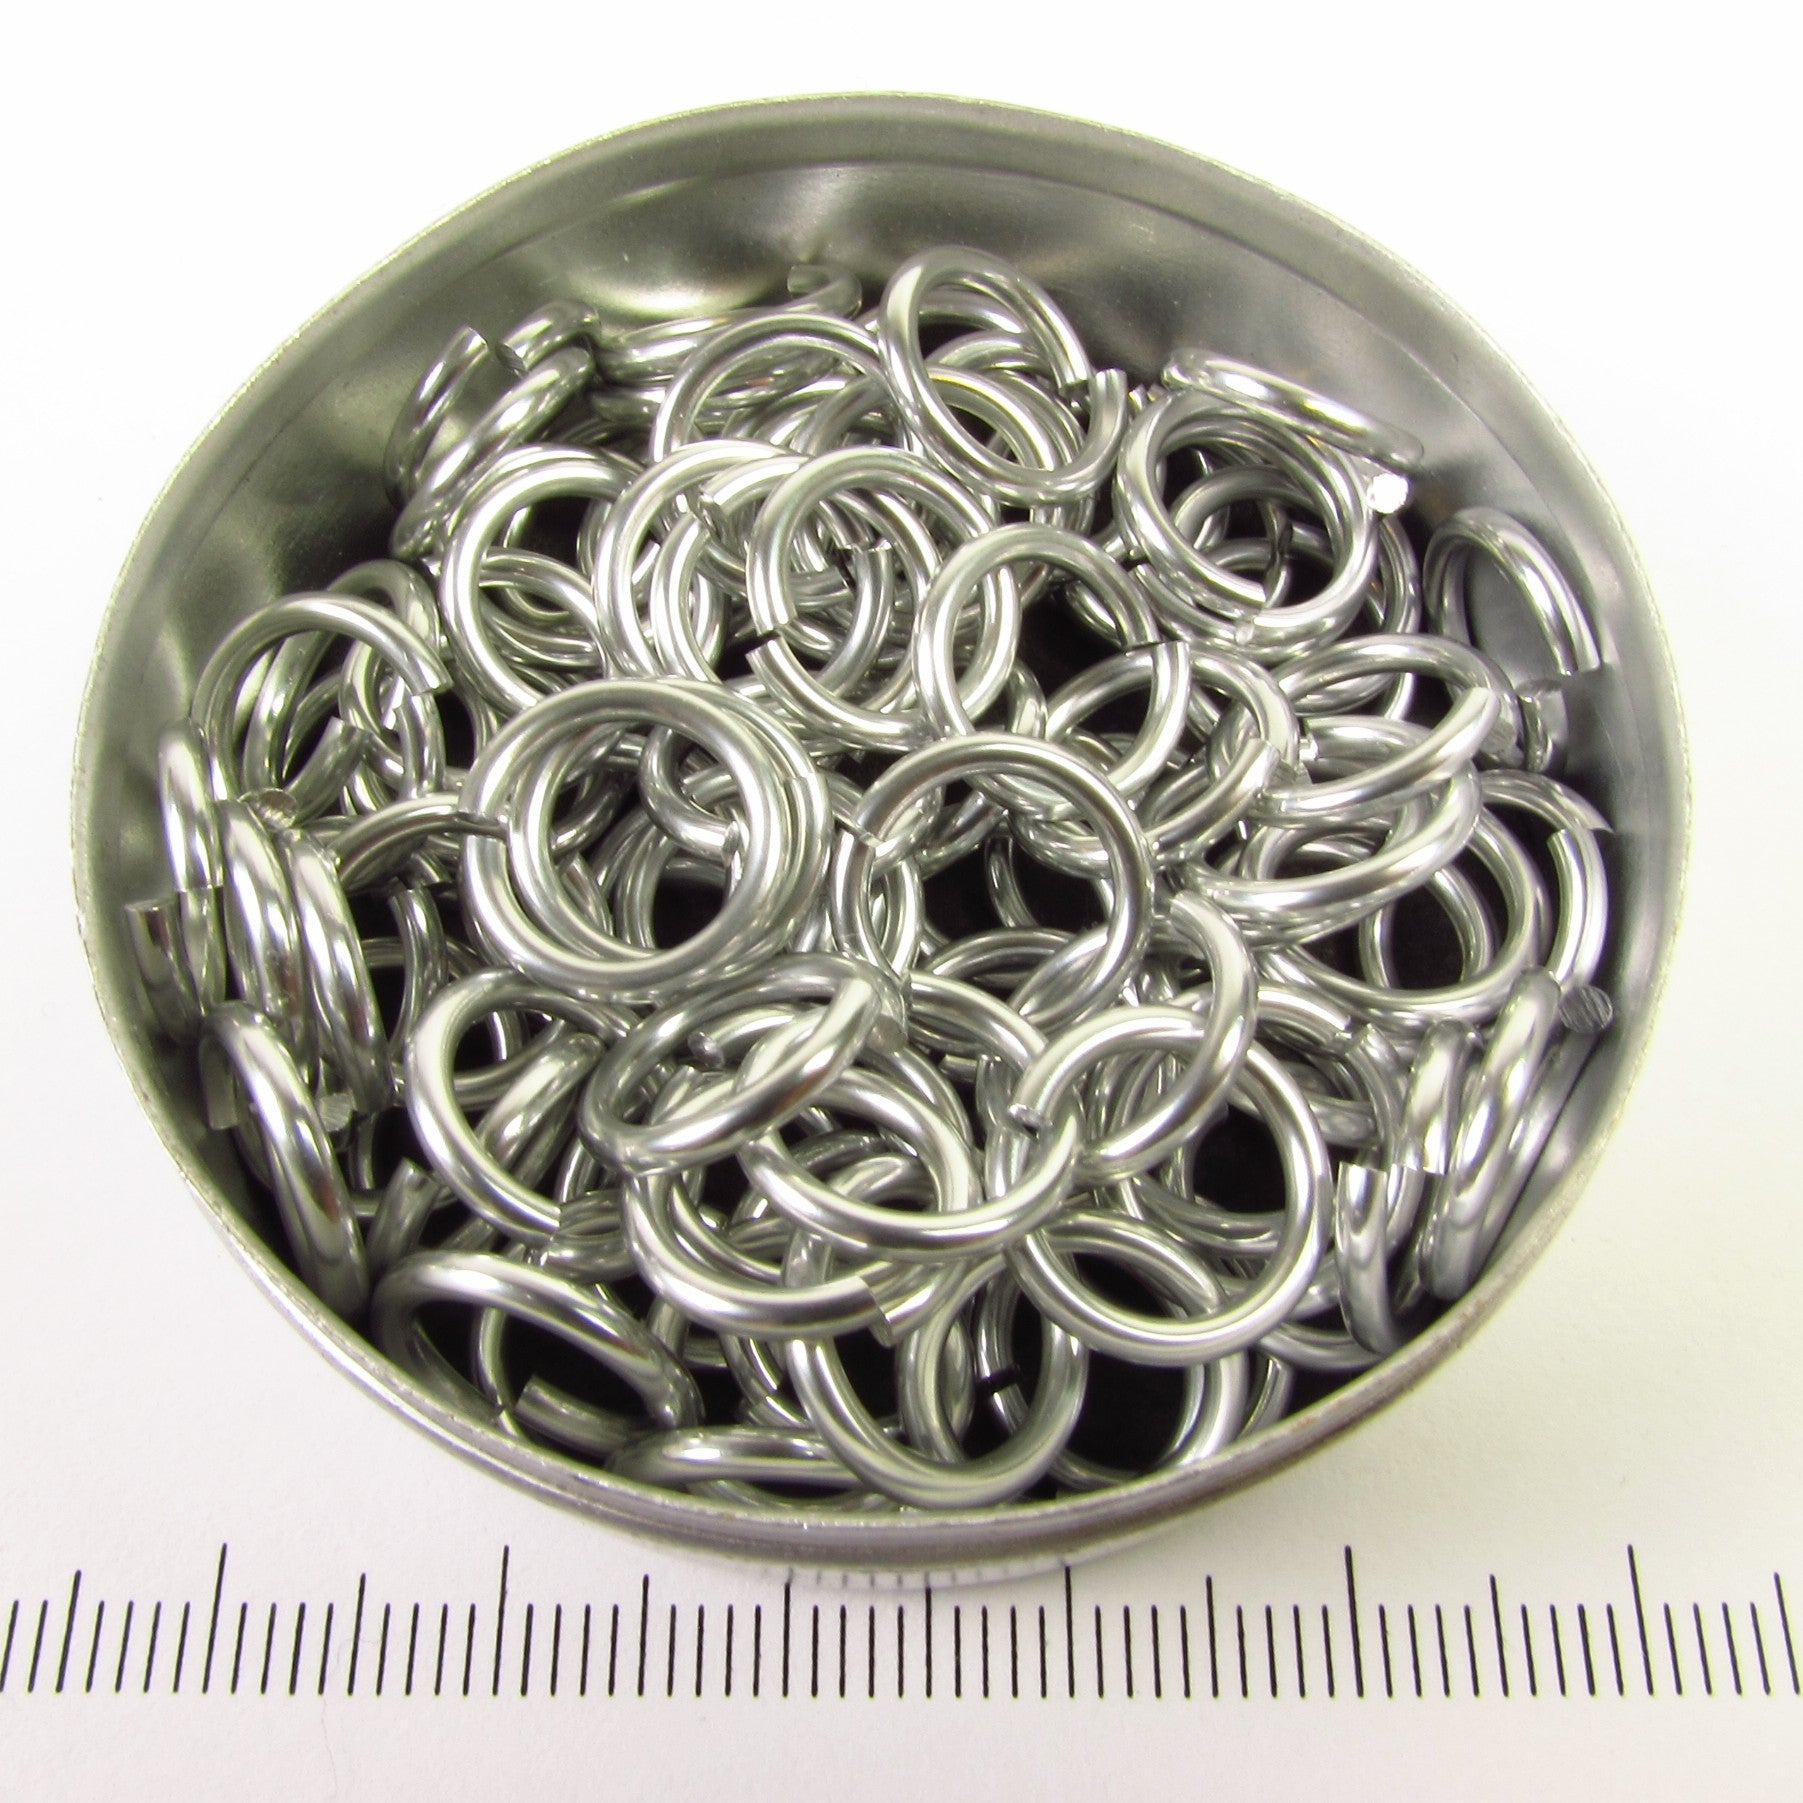 Glanzend zilverkleurig aluminium, 1,6x8,2 mm